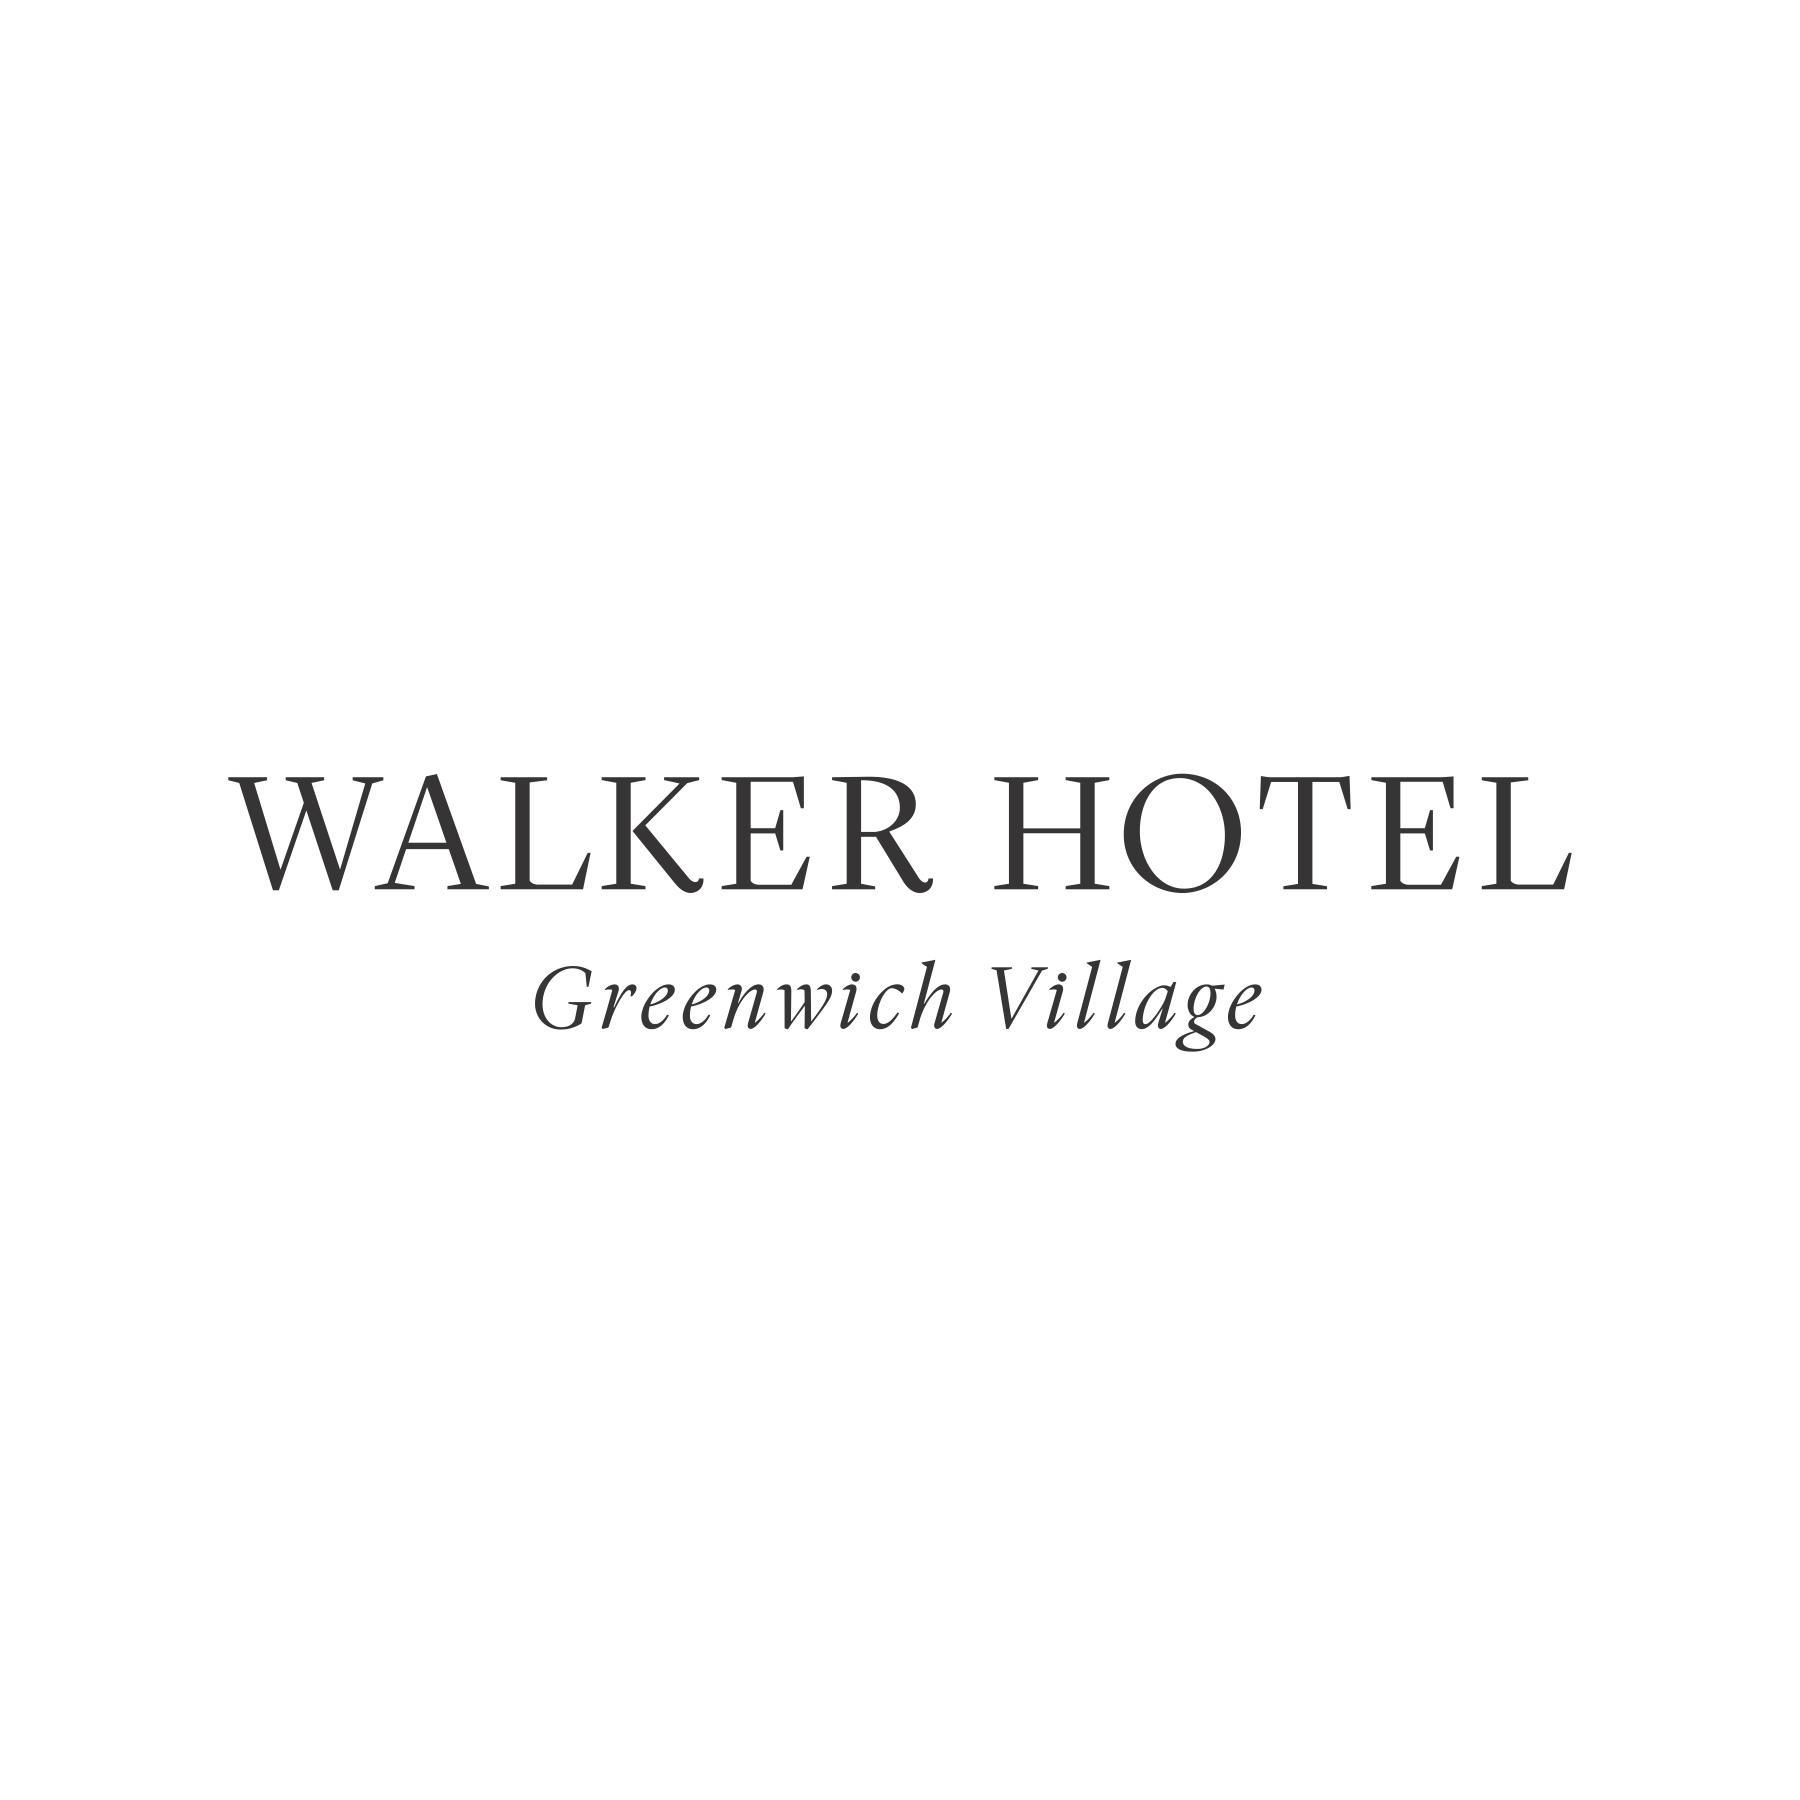 Walker Hotel Greenwich Village - New York, NY 10011 - (212)375-1300 | ShowMeLocal.com